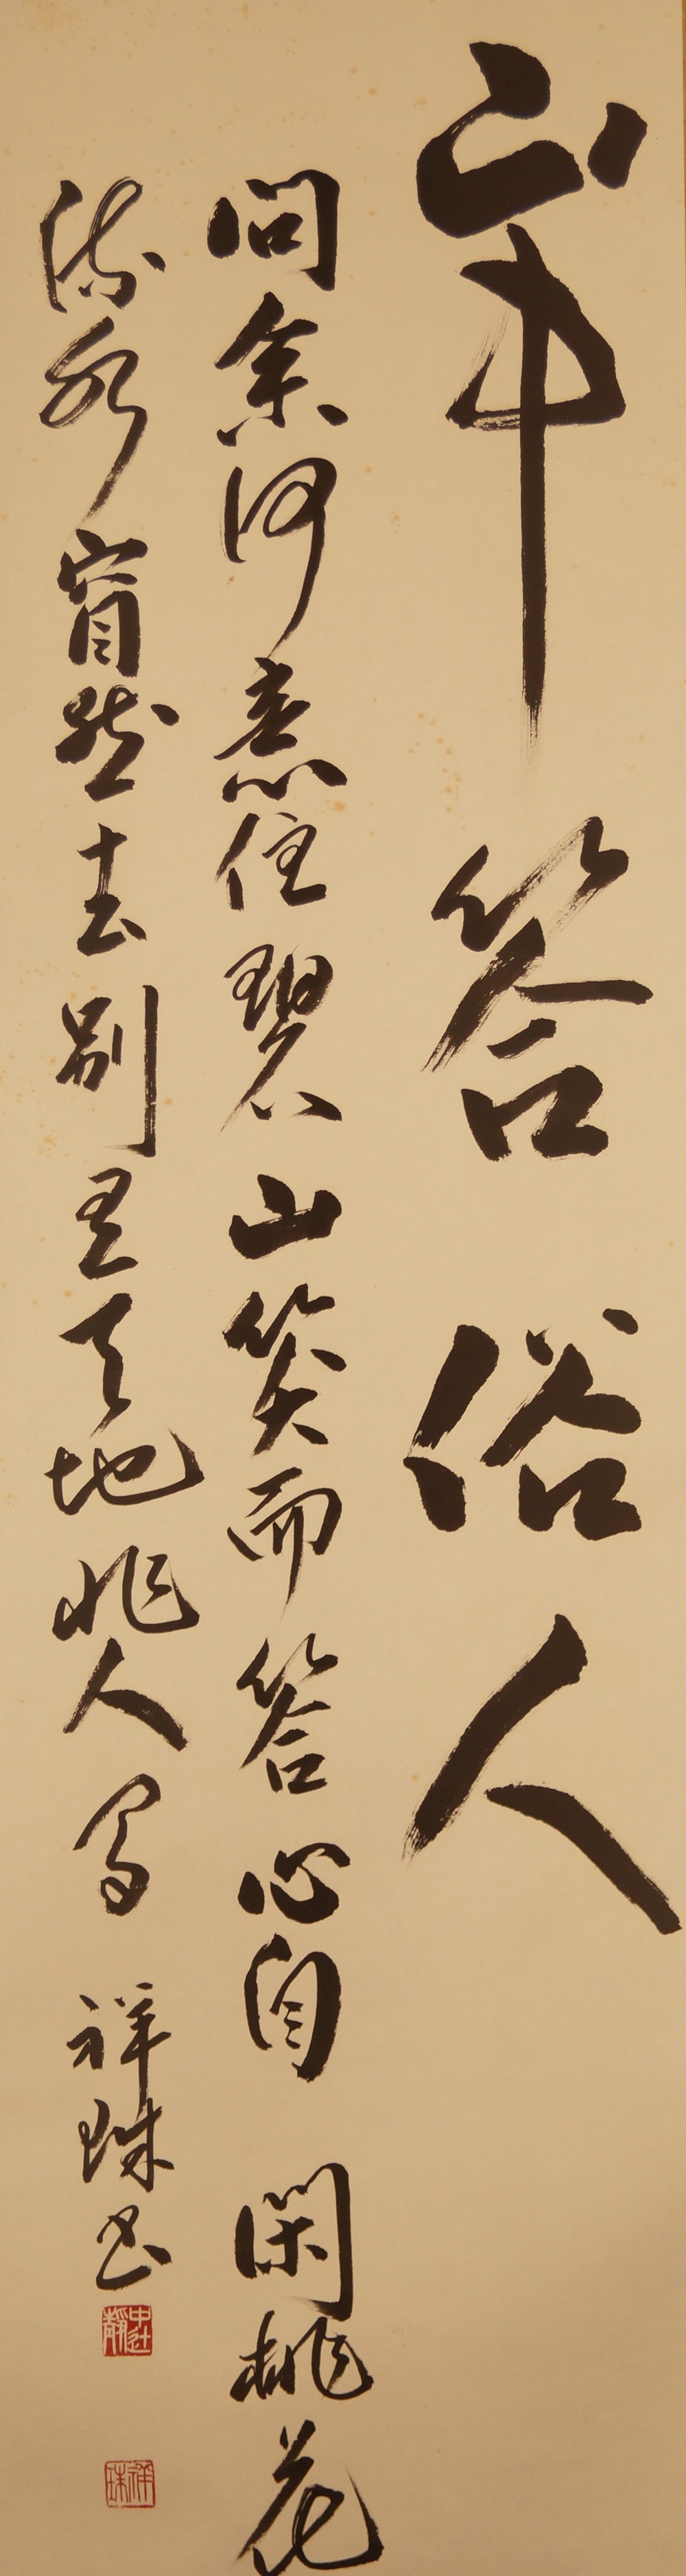 Kalligrafie Gedicht von Ba Li - Japanisches Rollbild (Kakejiku, Kakemono)